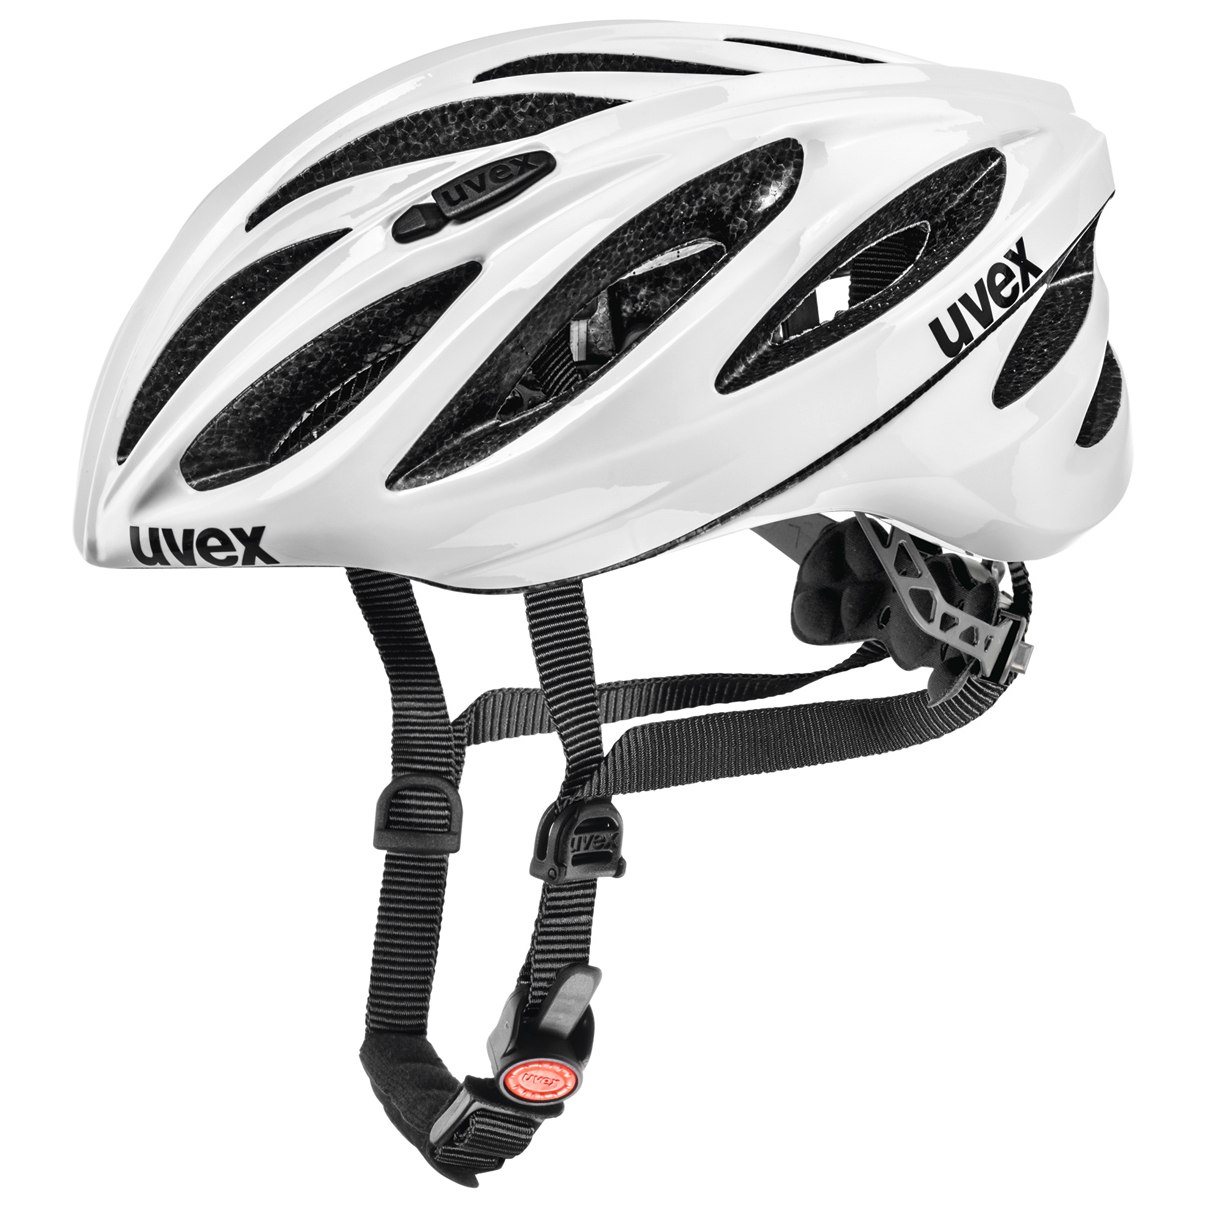 Productfoto van Uvex boss race Helm - white